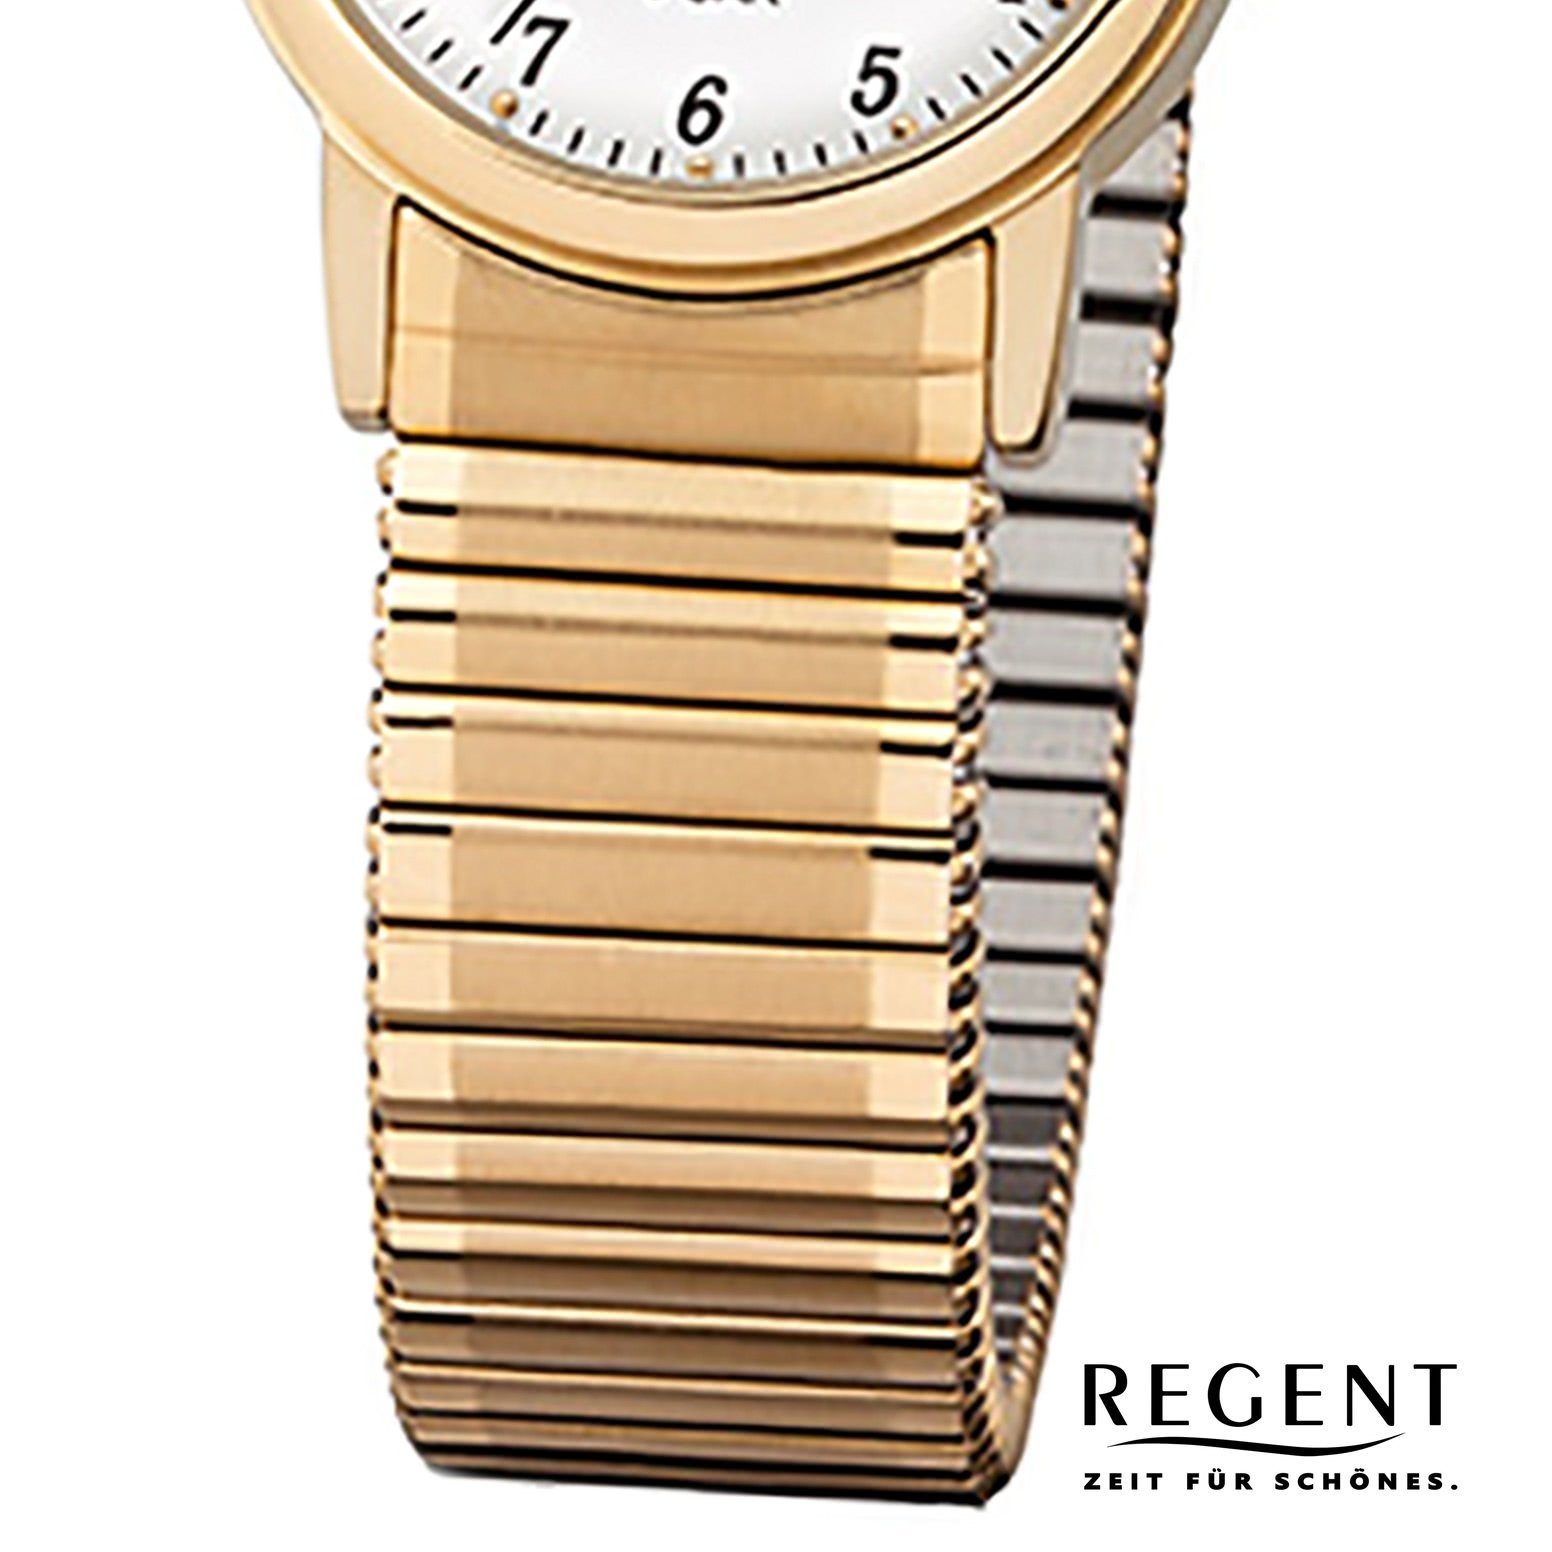 Edelstahl, Herren-Armbanduhr (ca. Regent Herren Regent gold 25mm) Quarzuhr goldarmband Analog, klein Damen Armbanduhr Damen, rund,